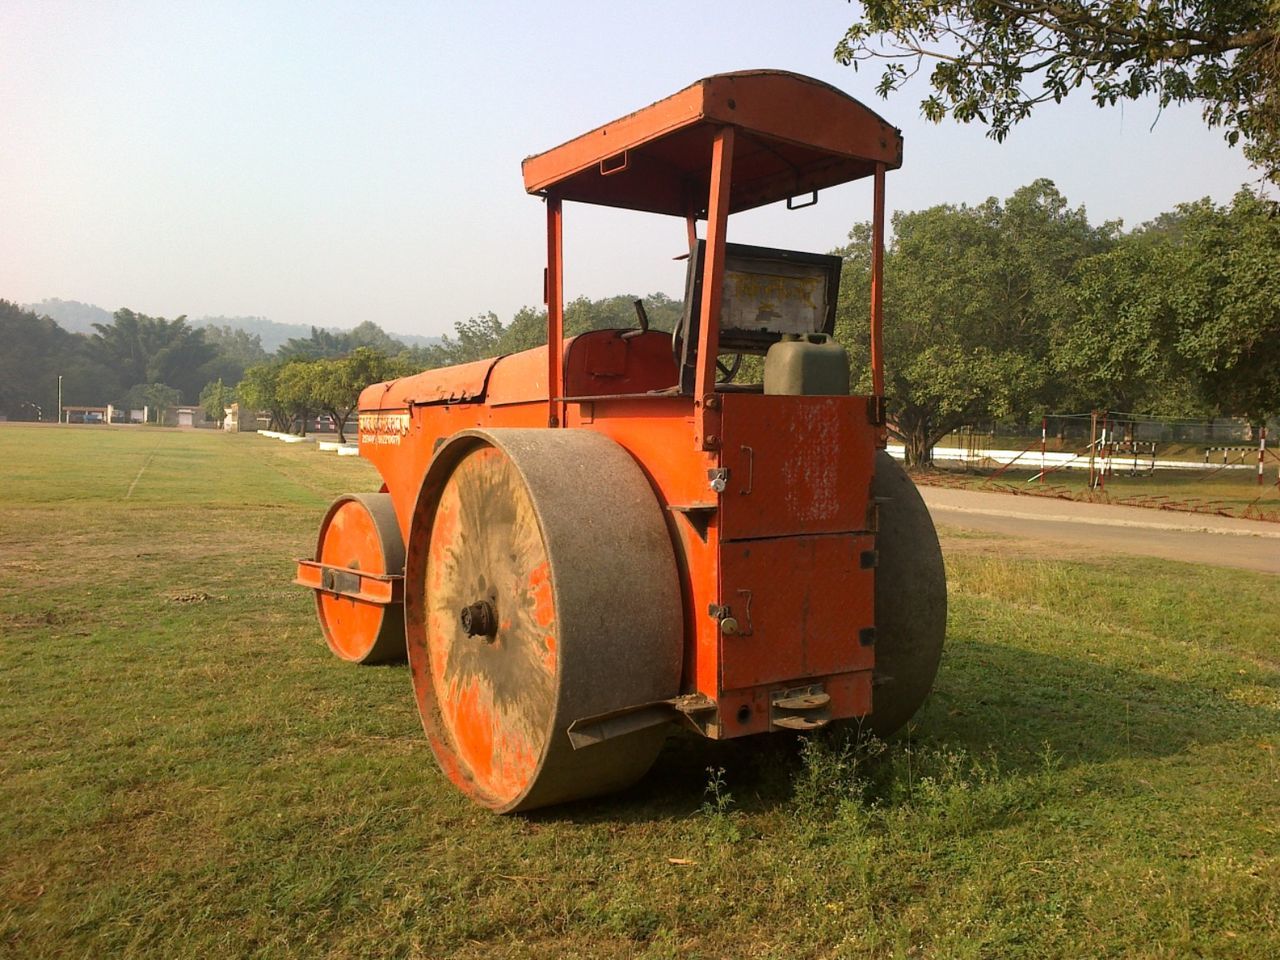 Steamroller on grassy field